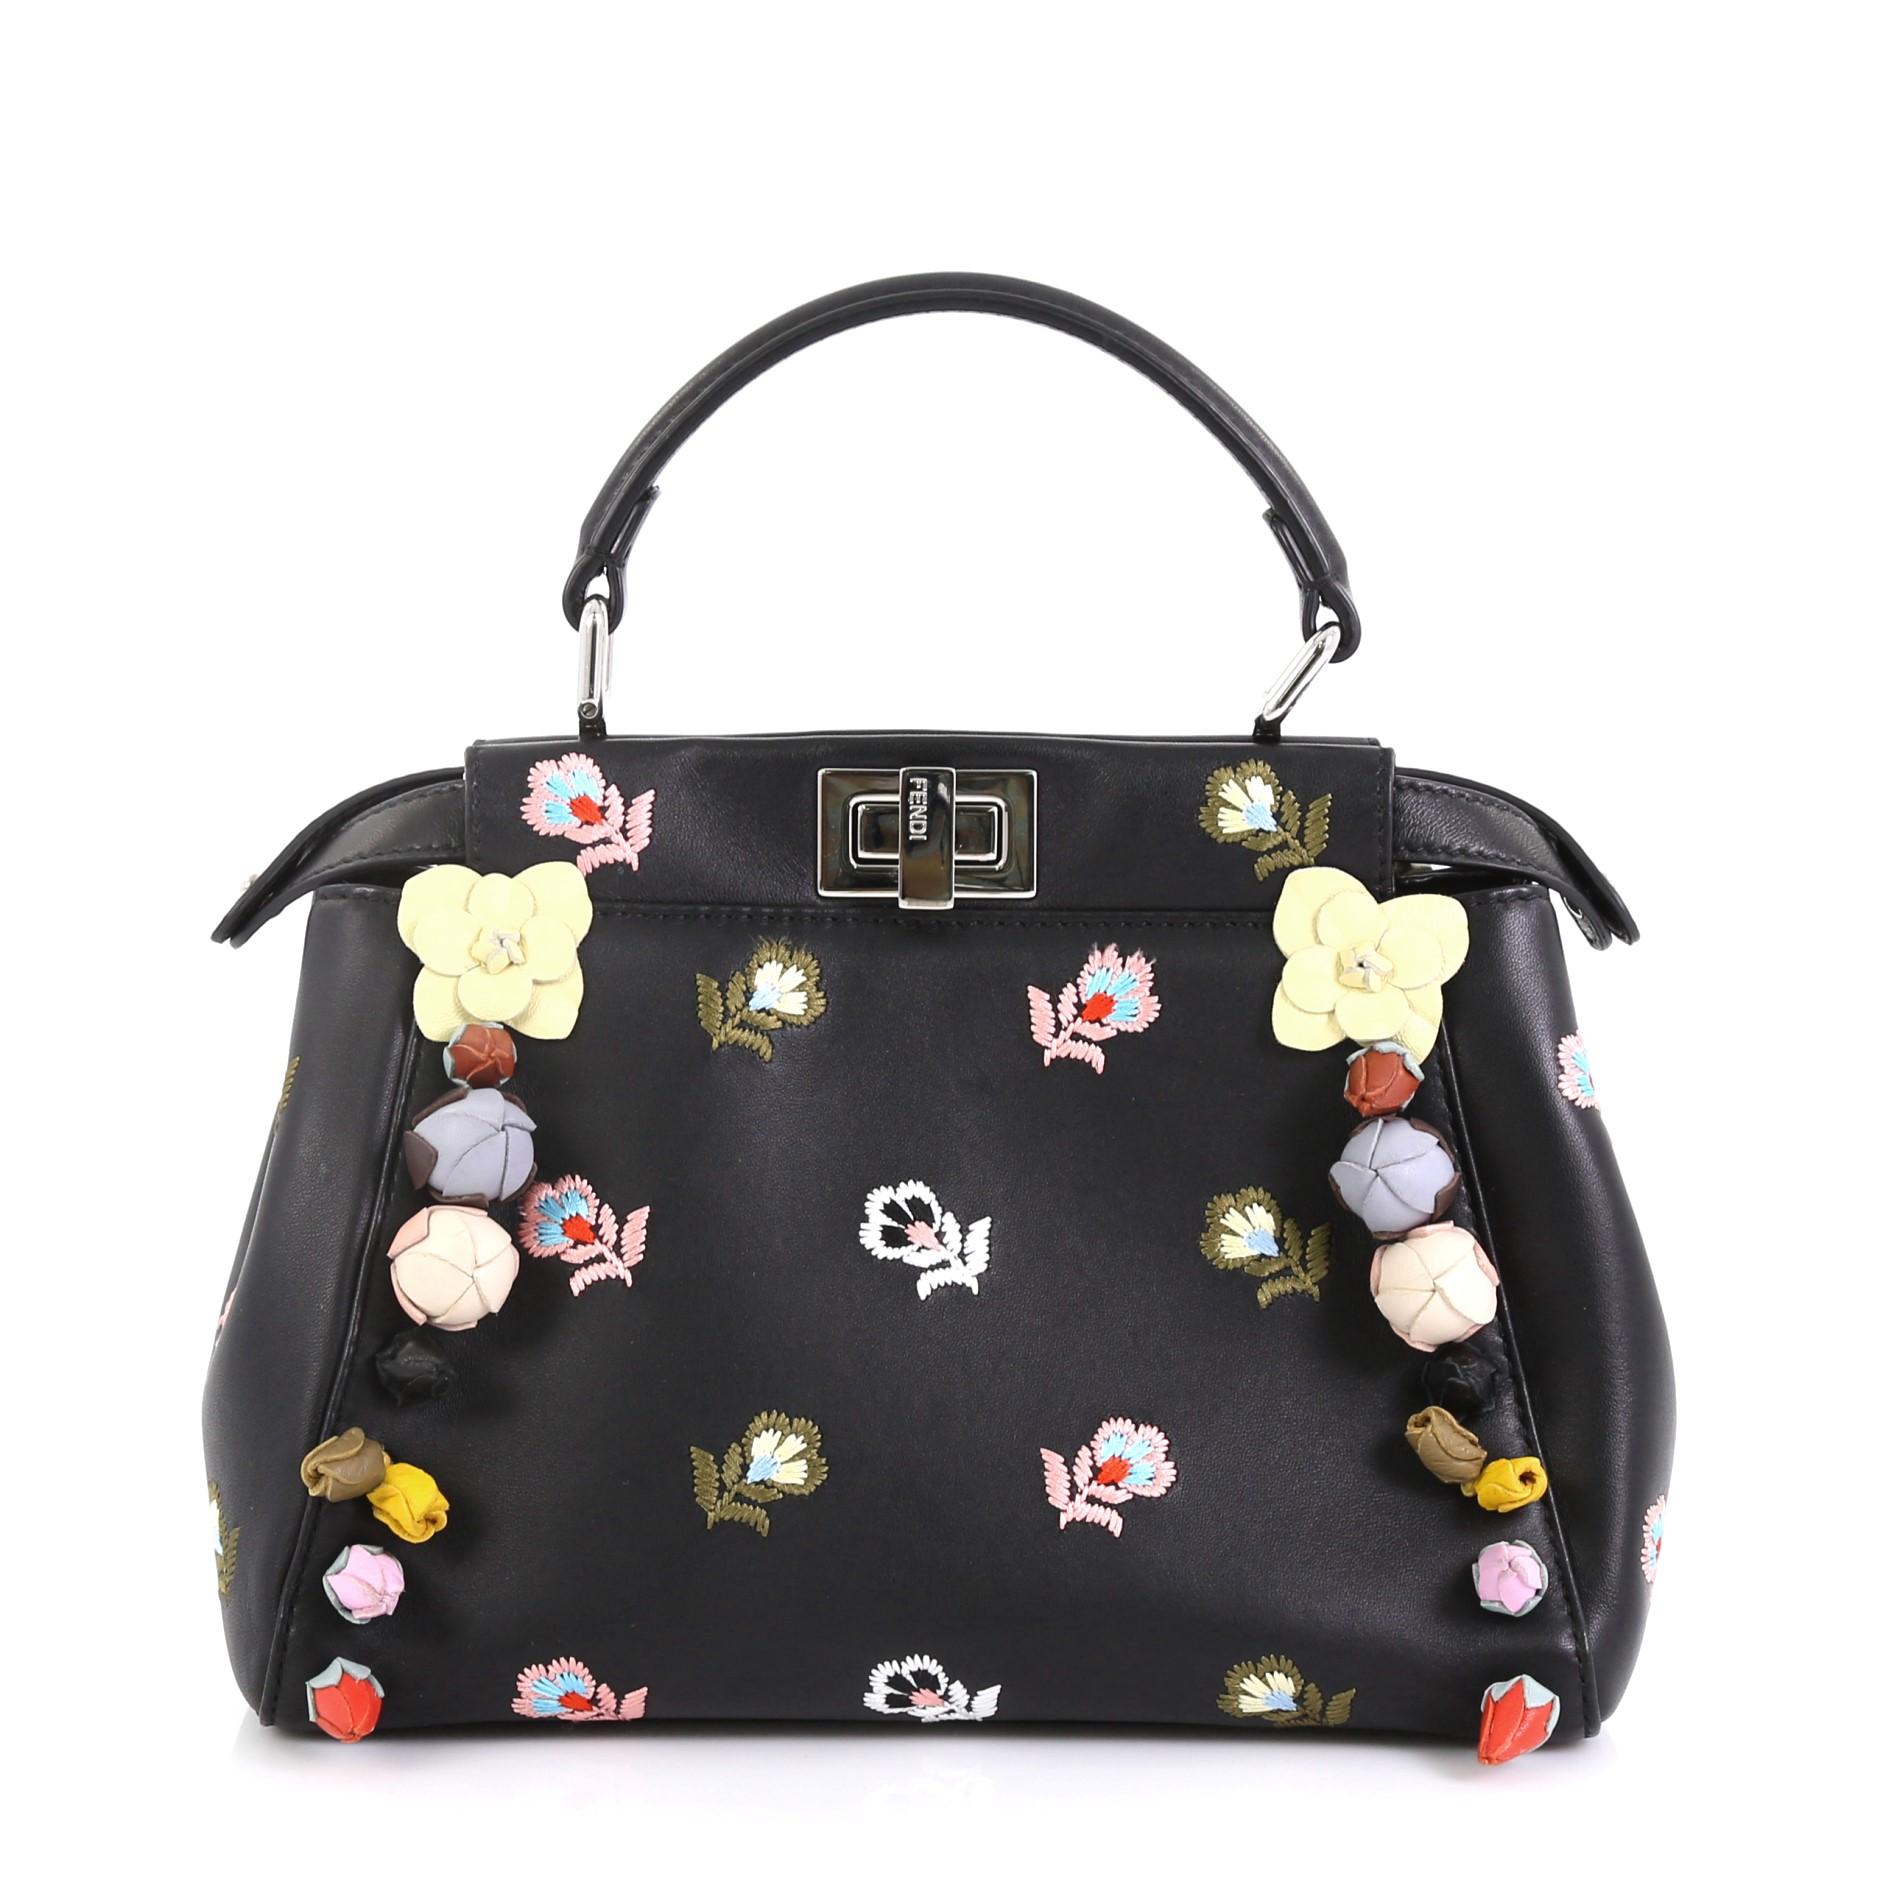 Black Fendi Peekaboo Bag Embroidered Leather with Floral Applique Mini